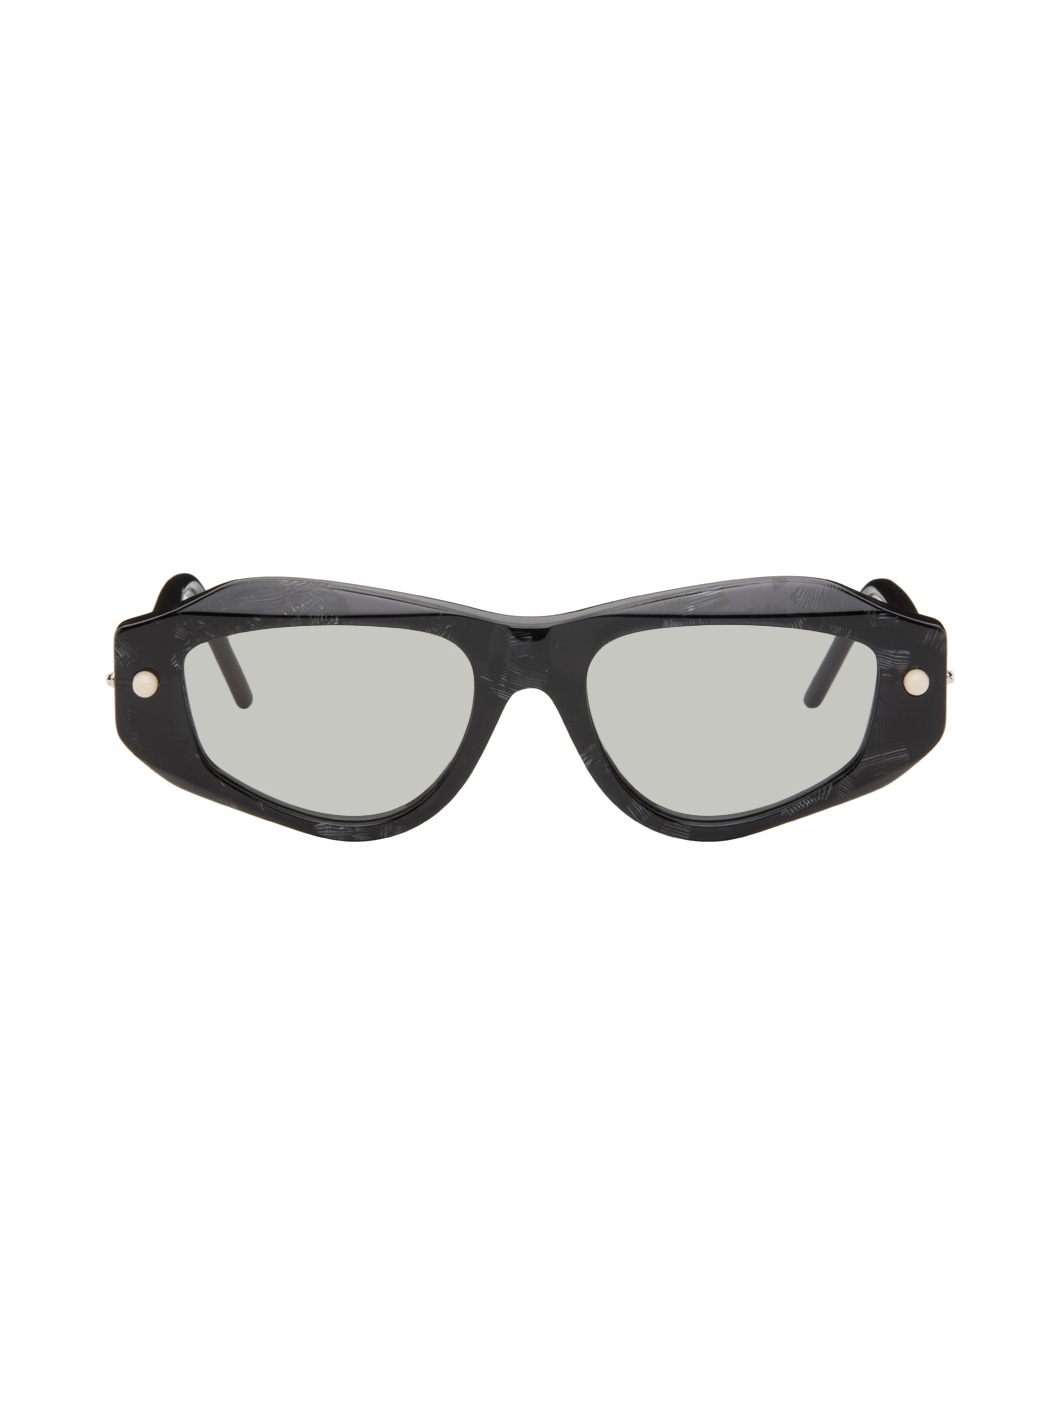 Black & Tortoiseshell P15 Sunglasses - 1